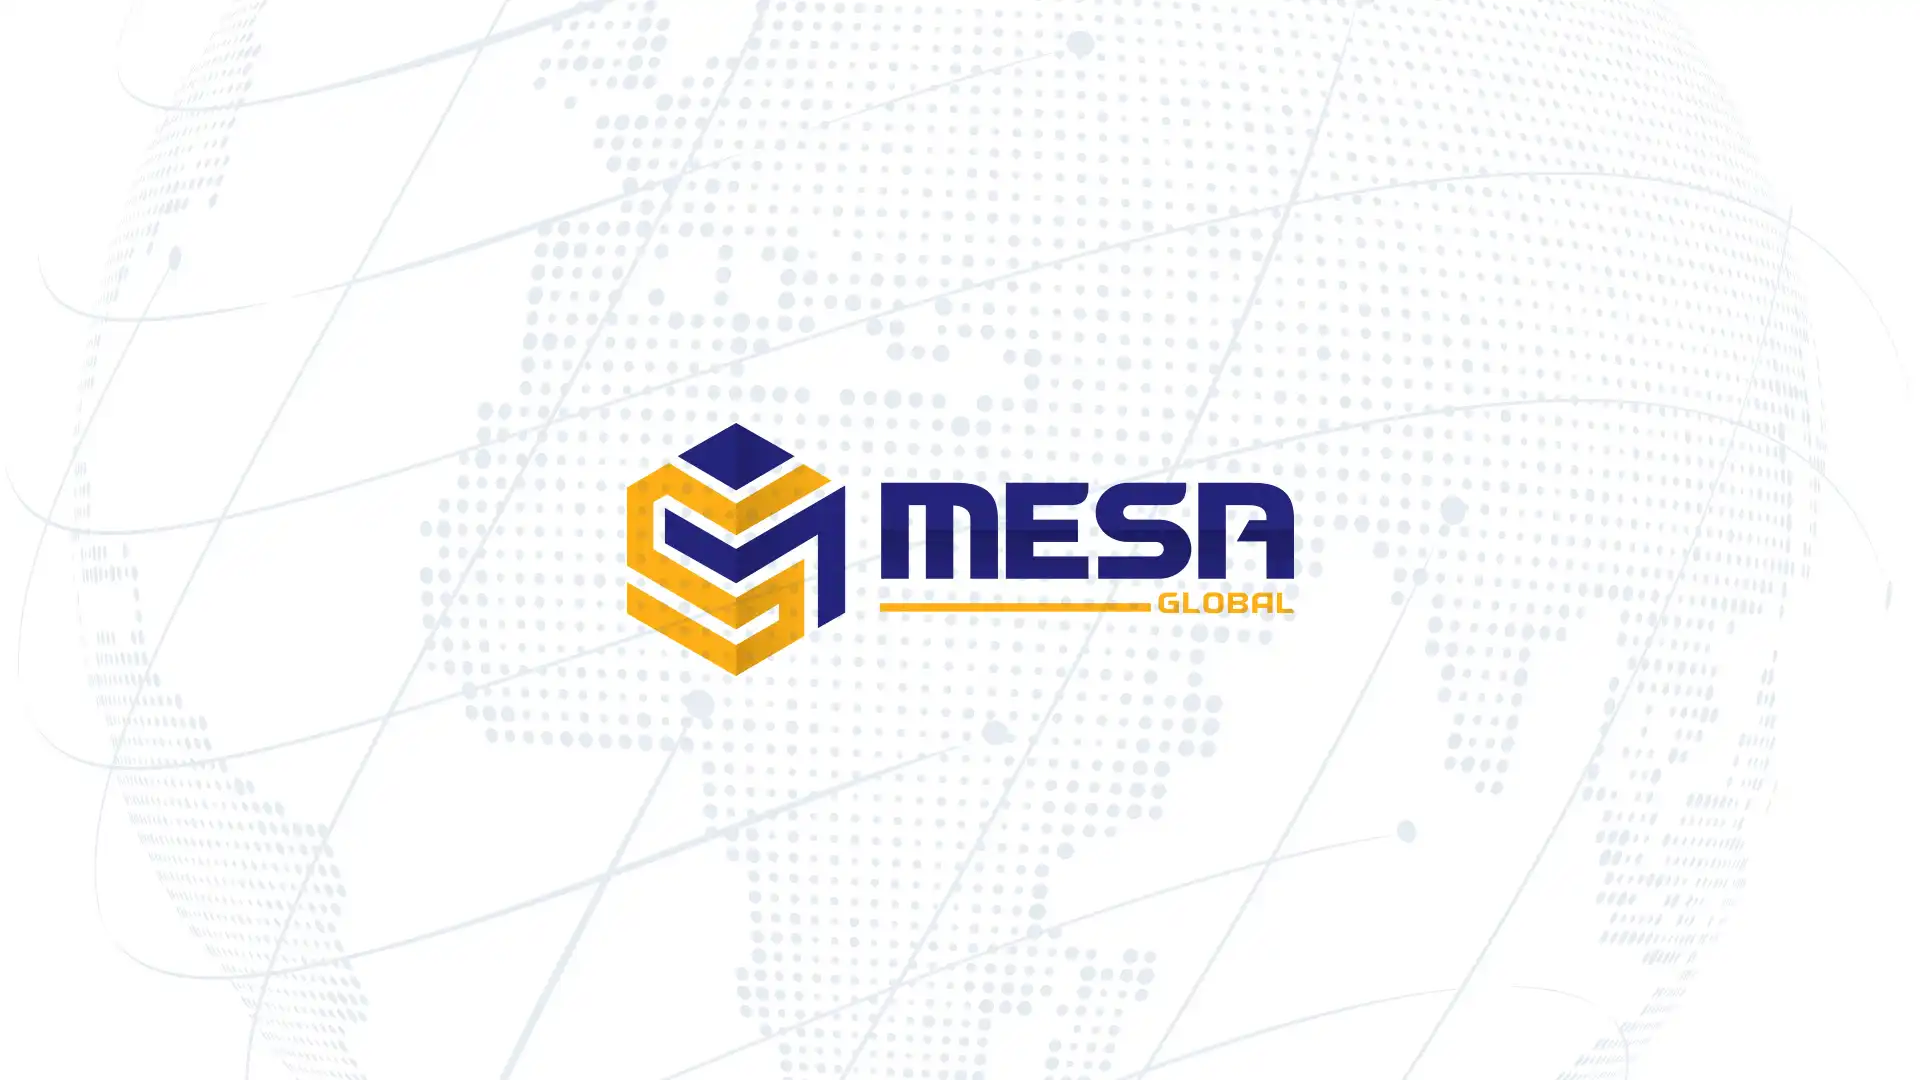 Mesa Global